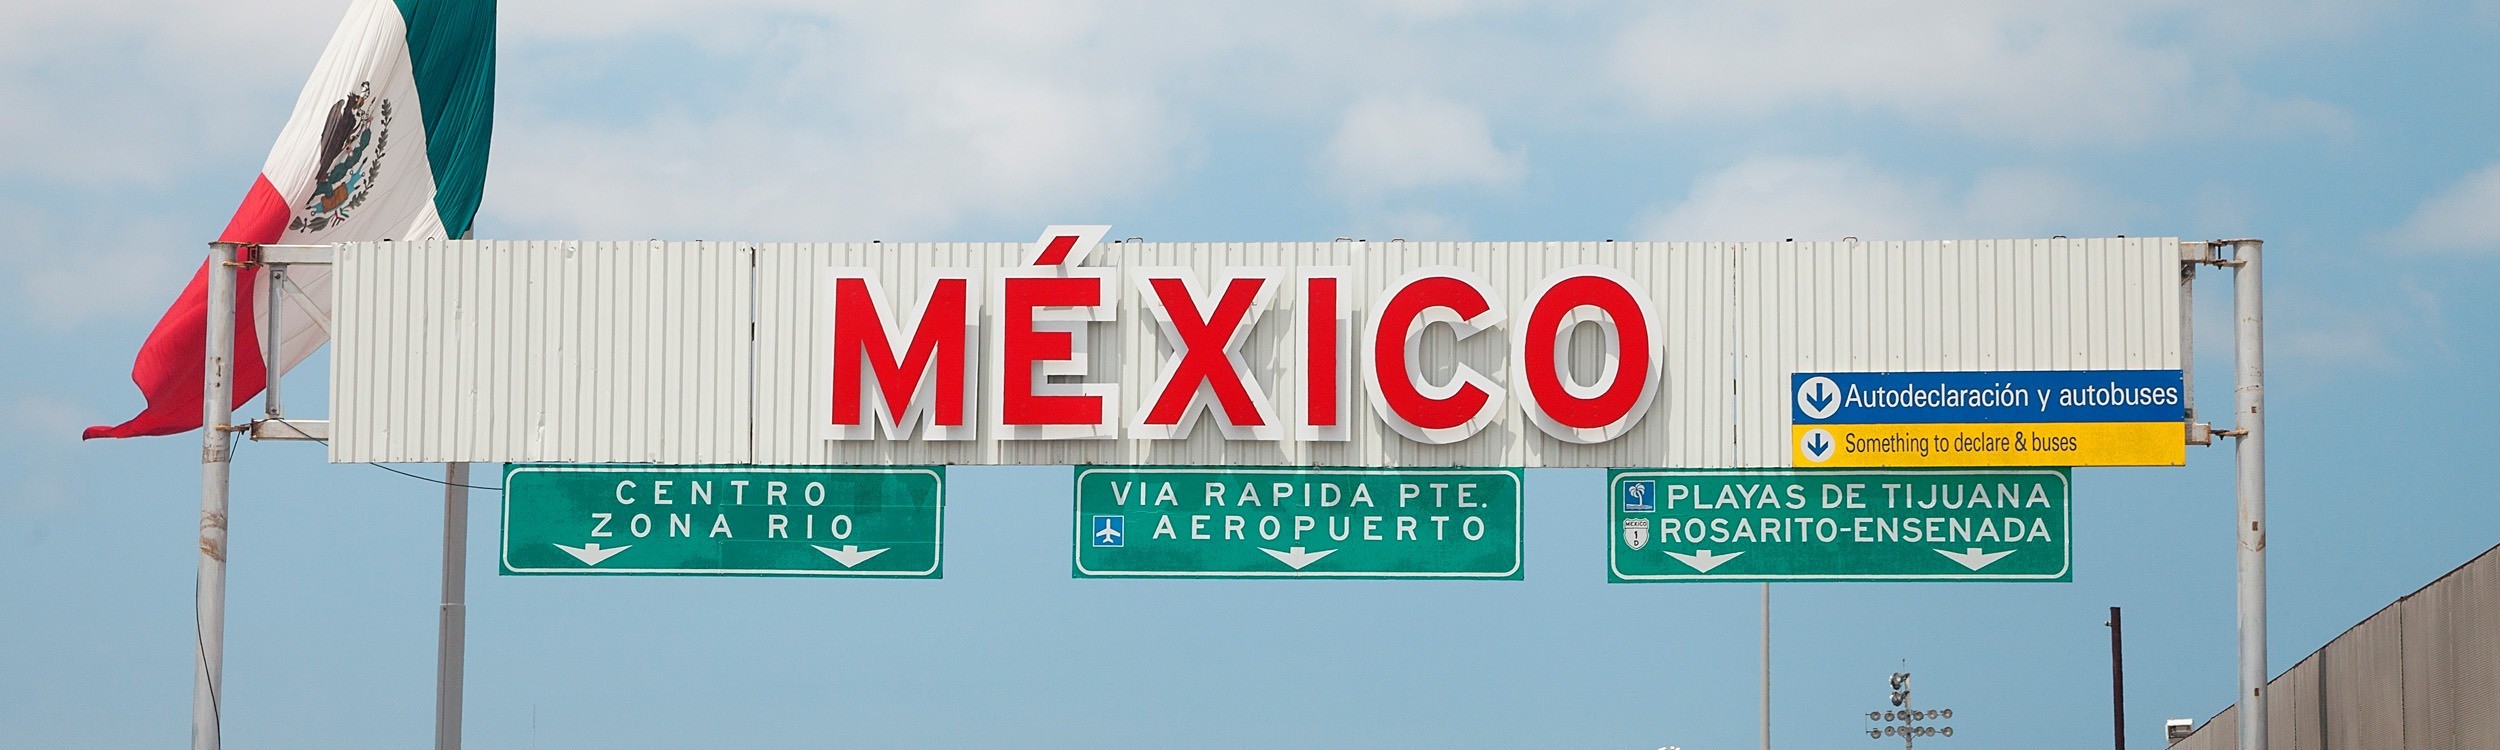 mexico sign at san diego tijuana border